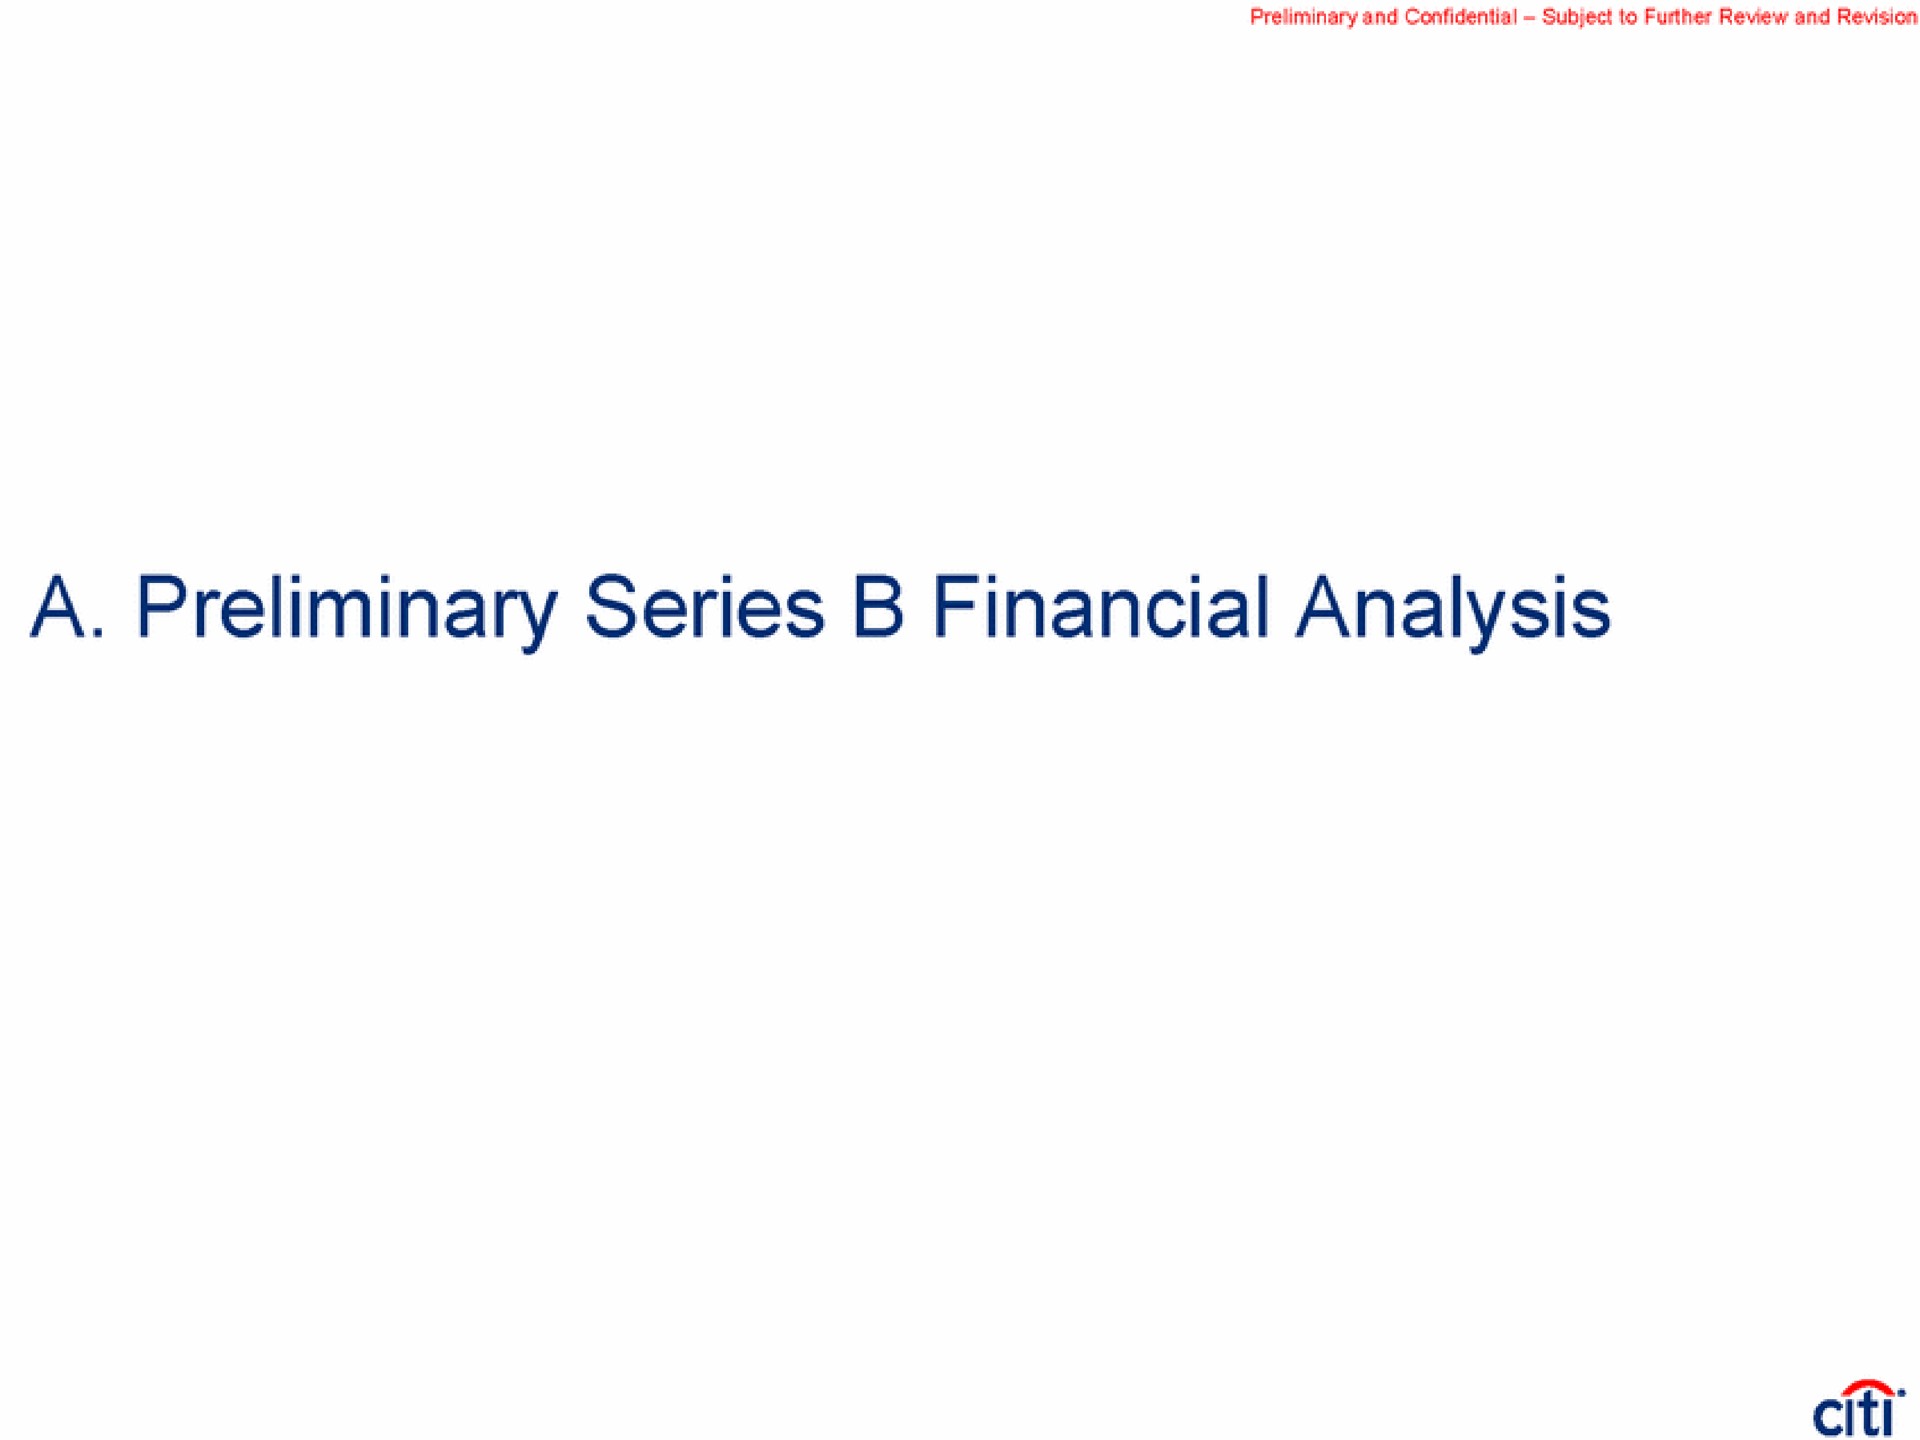 a preliminary series financial analysis | Citi